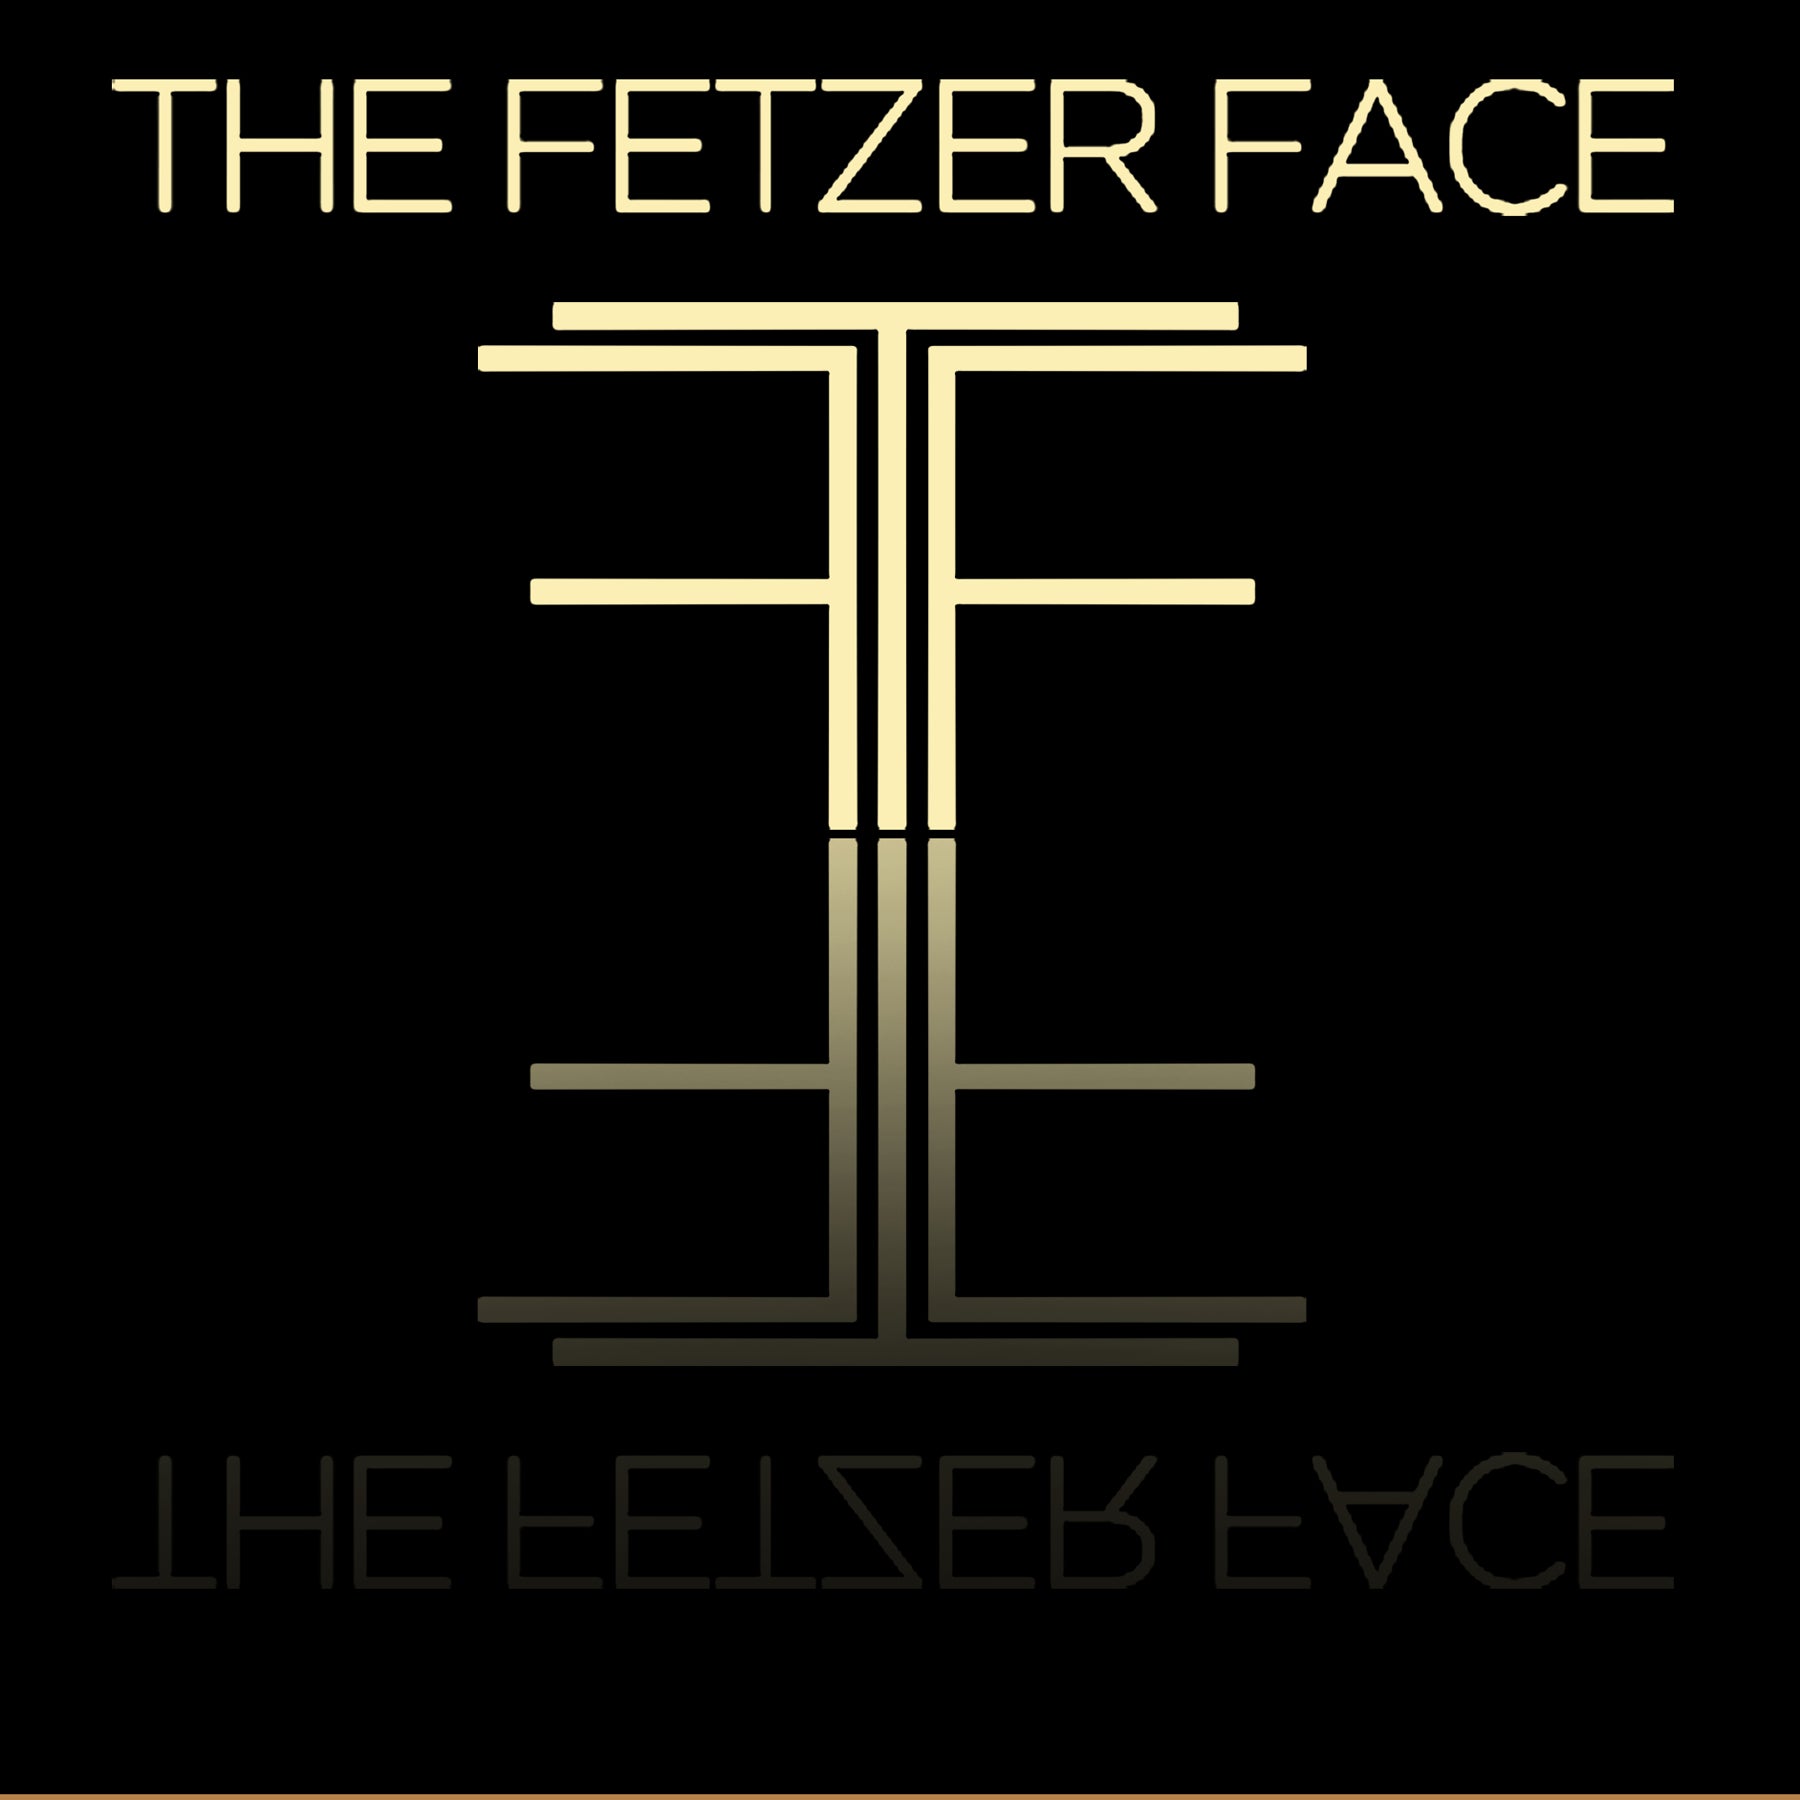 The Fetzer Face Logo